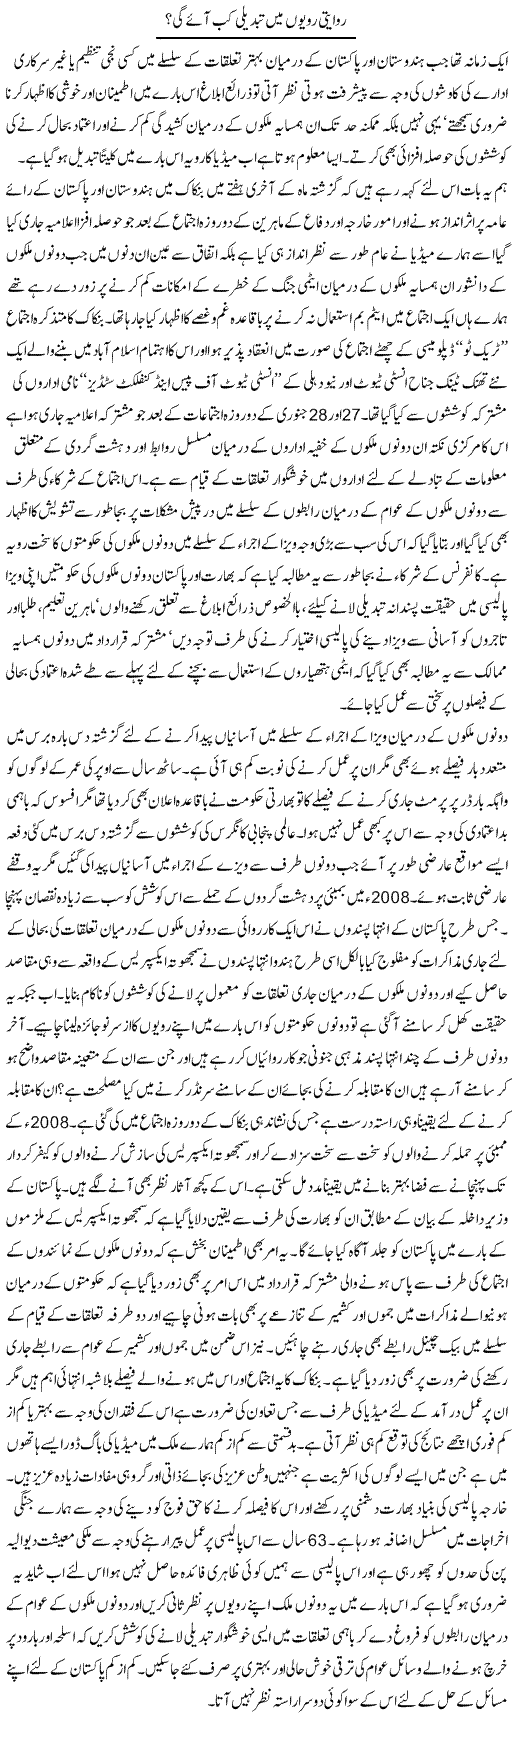 Pakistan India Express Column Hameed Akhtar 4 February 2011